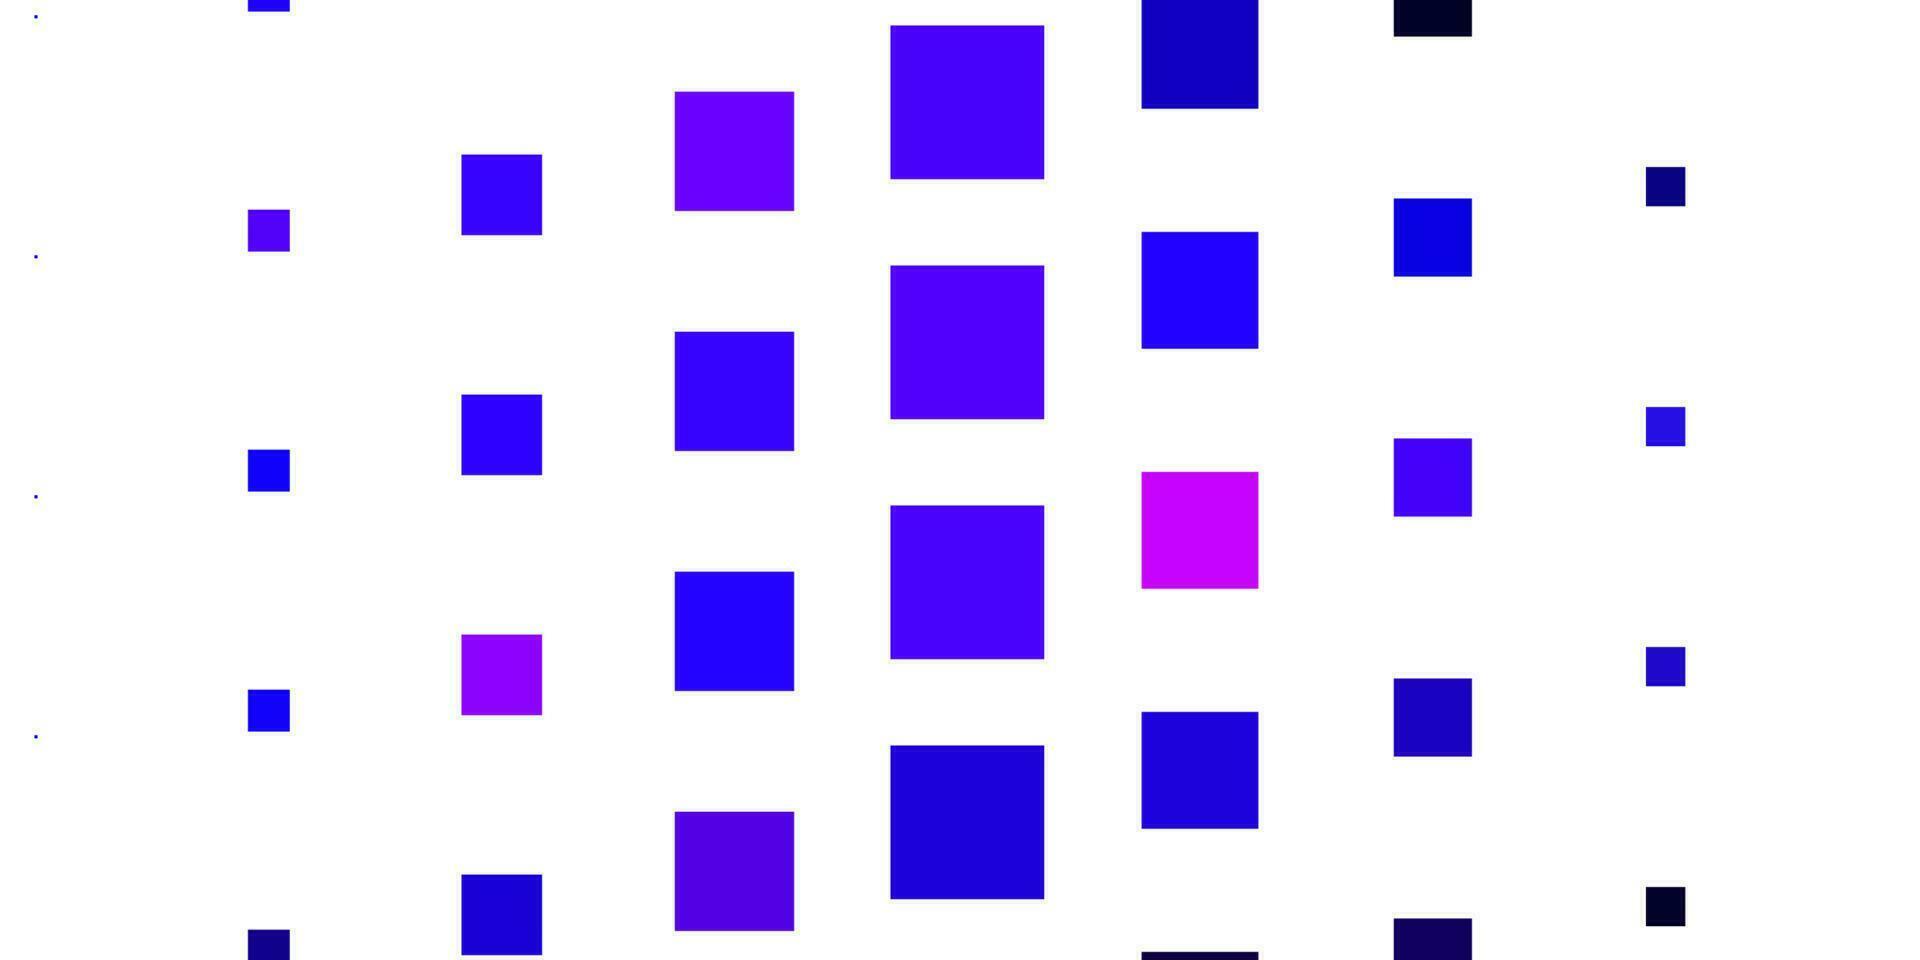 Dark Pink, Blue vector background in polygonal style.